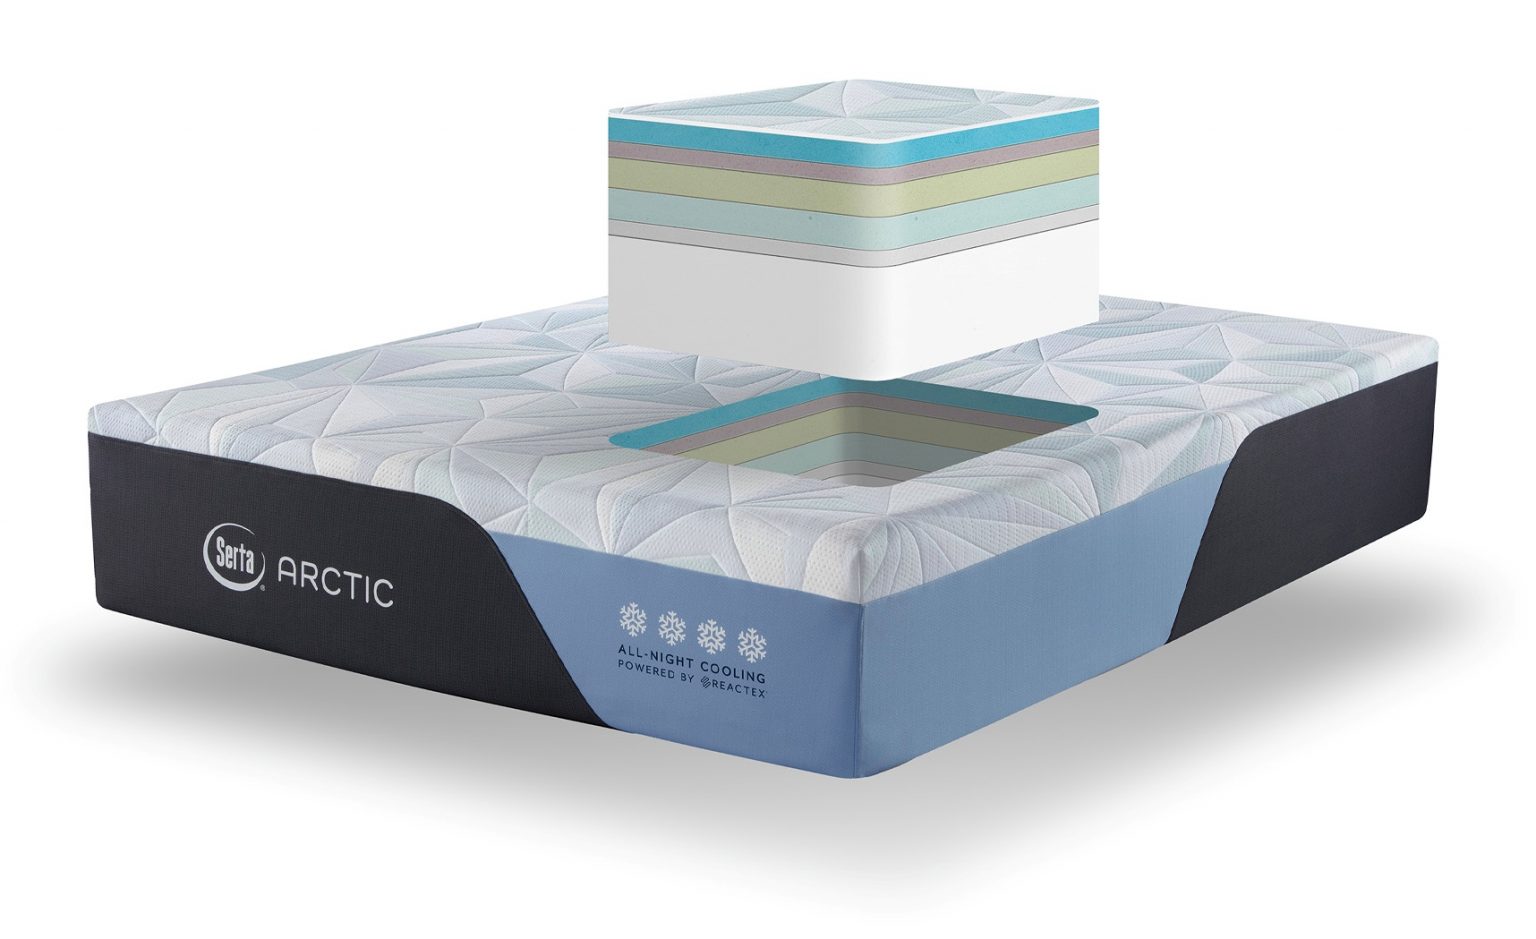 serta arctic hybrid mattress medium reviews